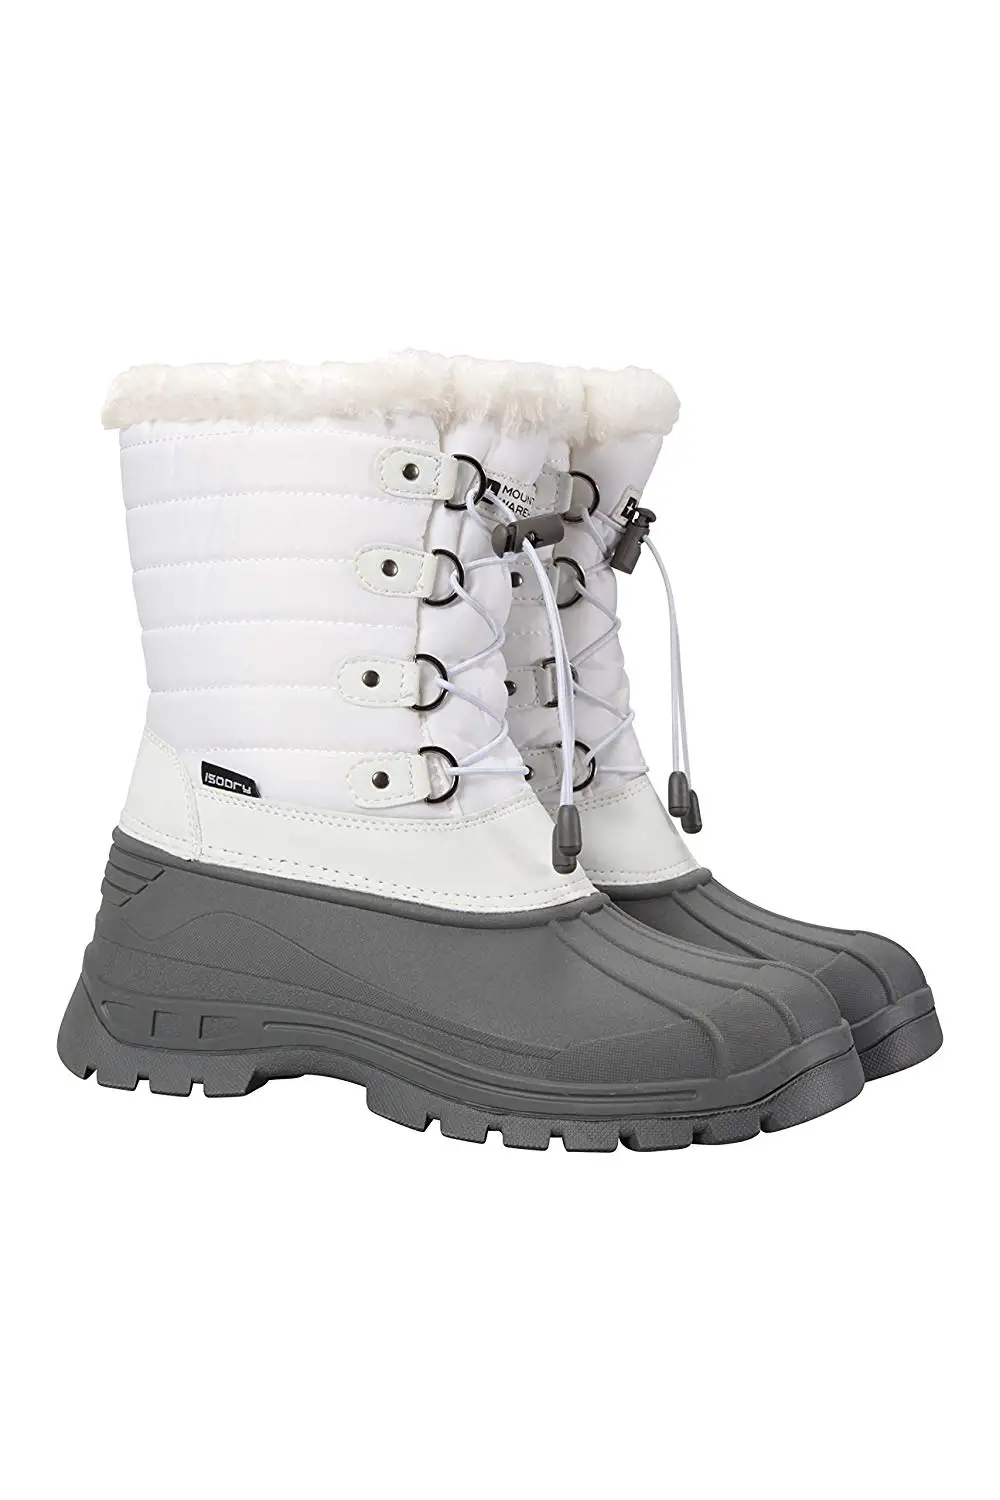 Mountain Warehouse Whistler Kids Snow Boots Warm Winter Boots